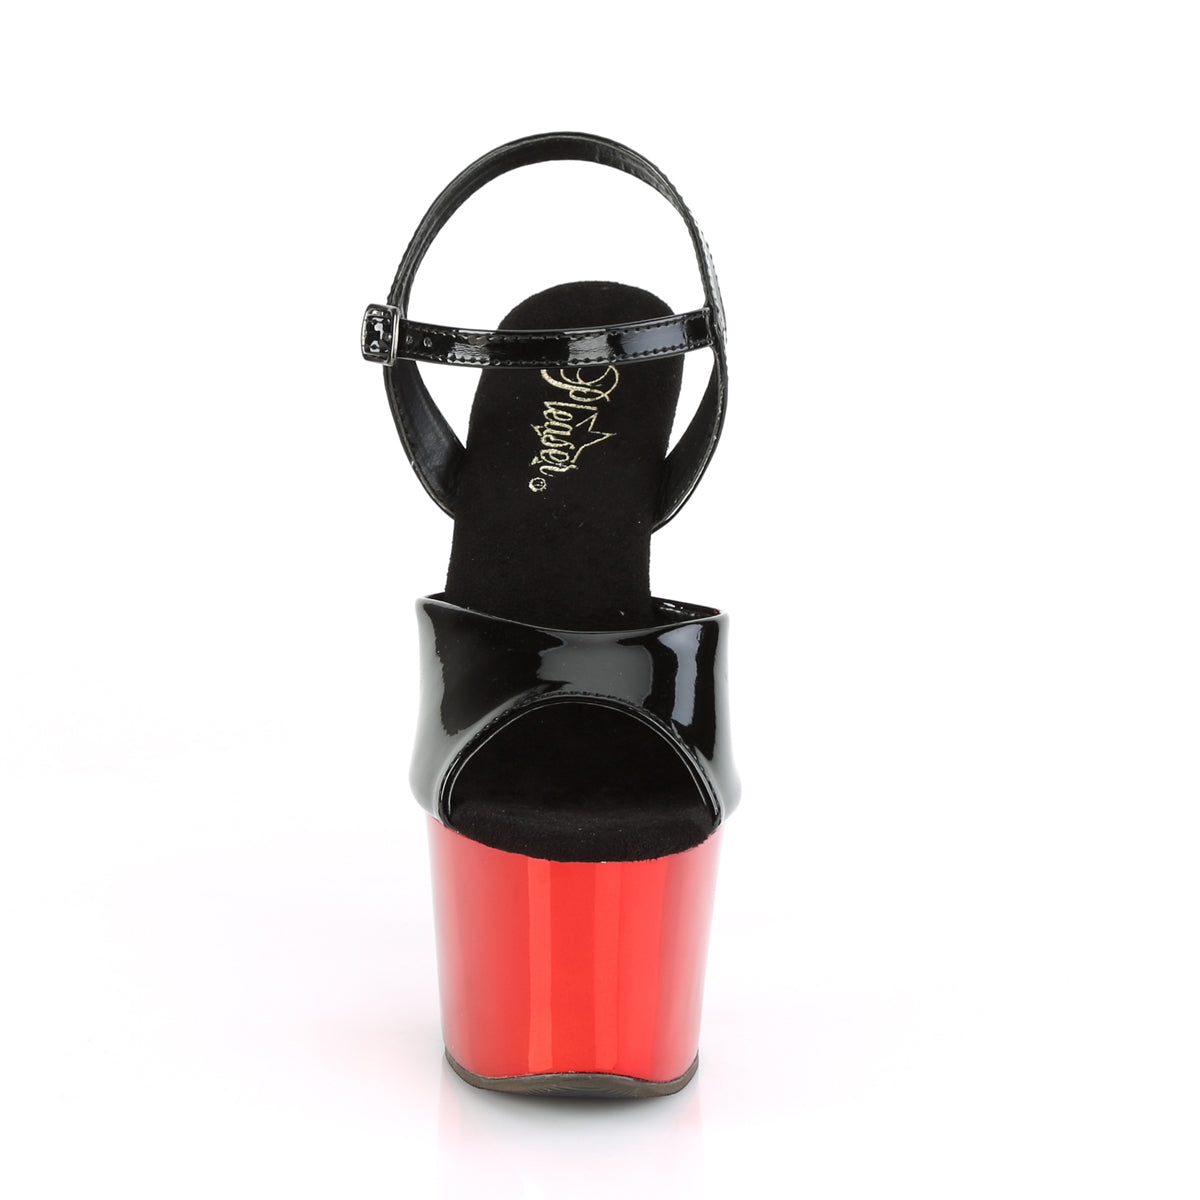 SKY-309 Black Patent/Red Chrome Platform Sandal Pleaser